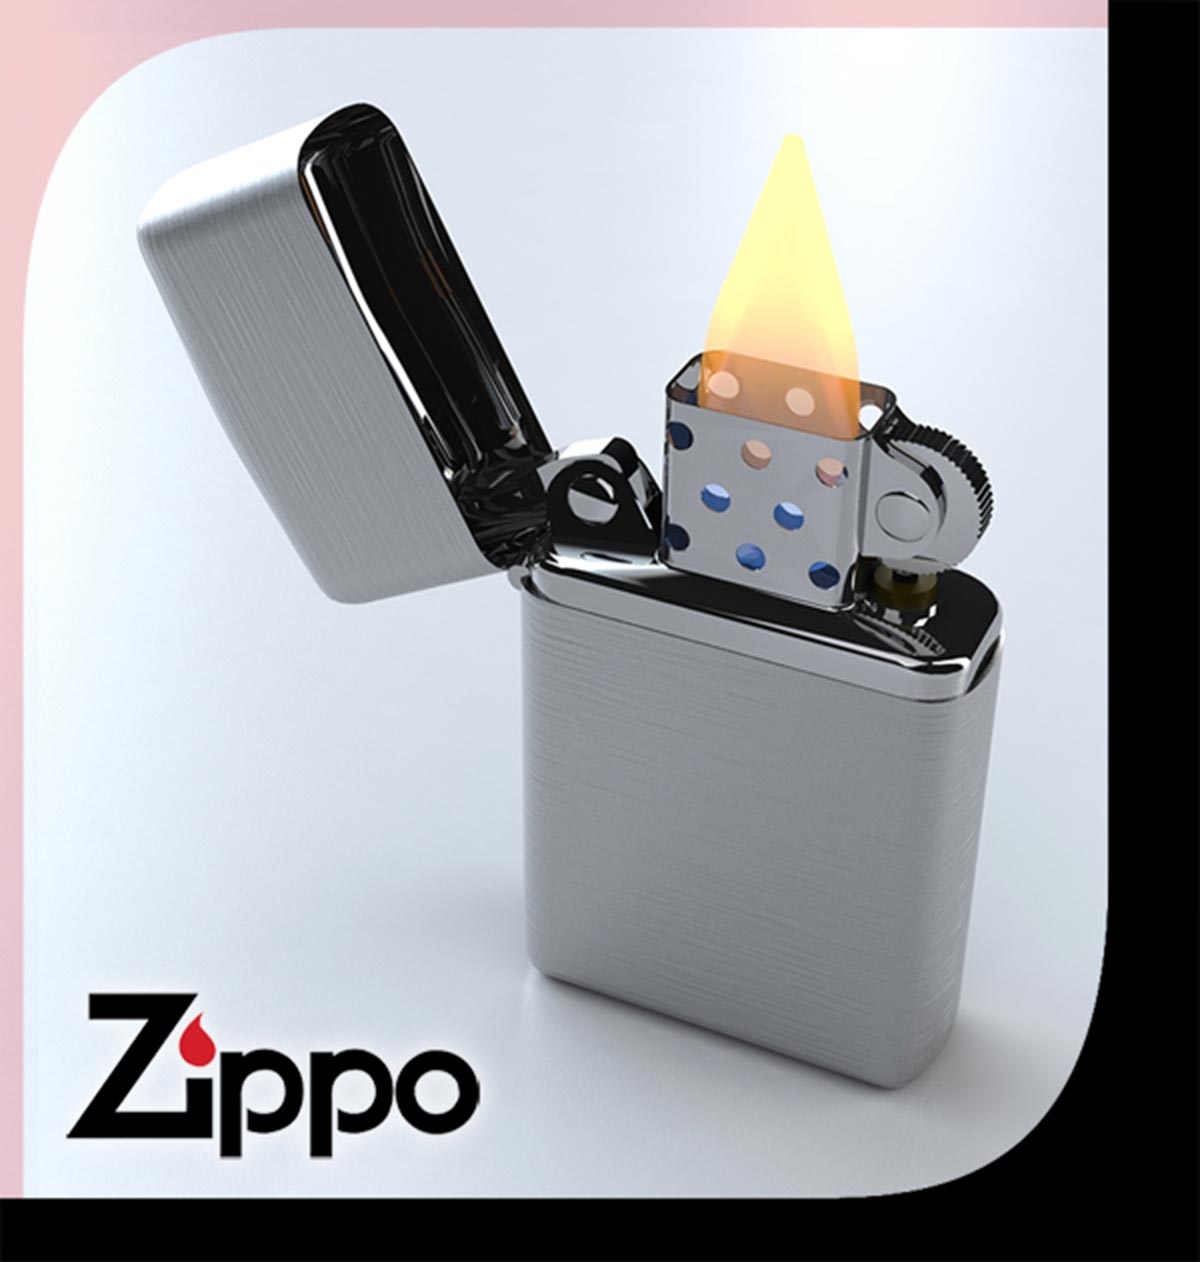 3D CGI - Zippo Lighter